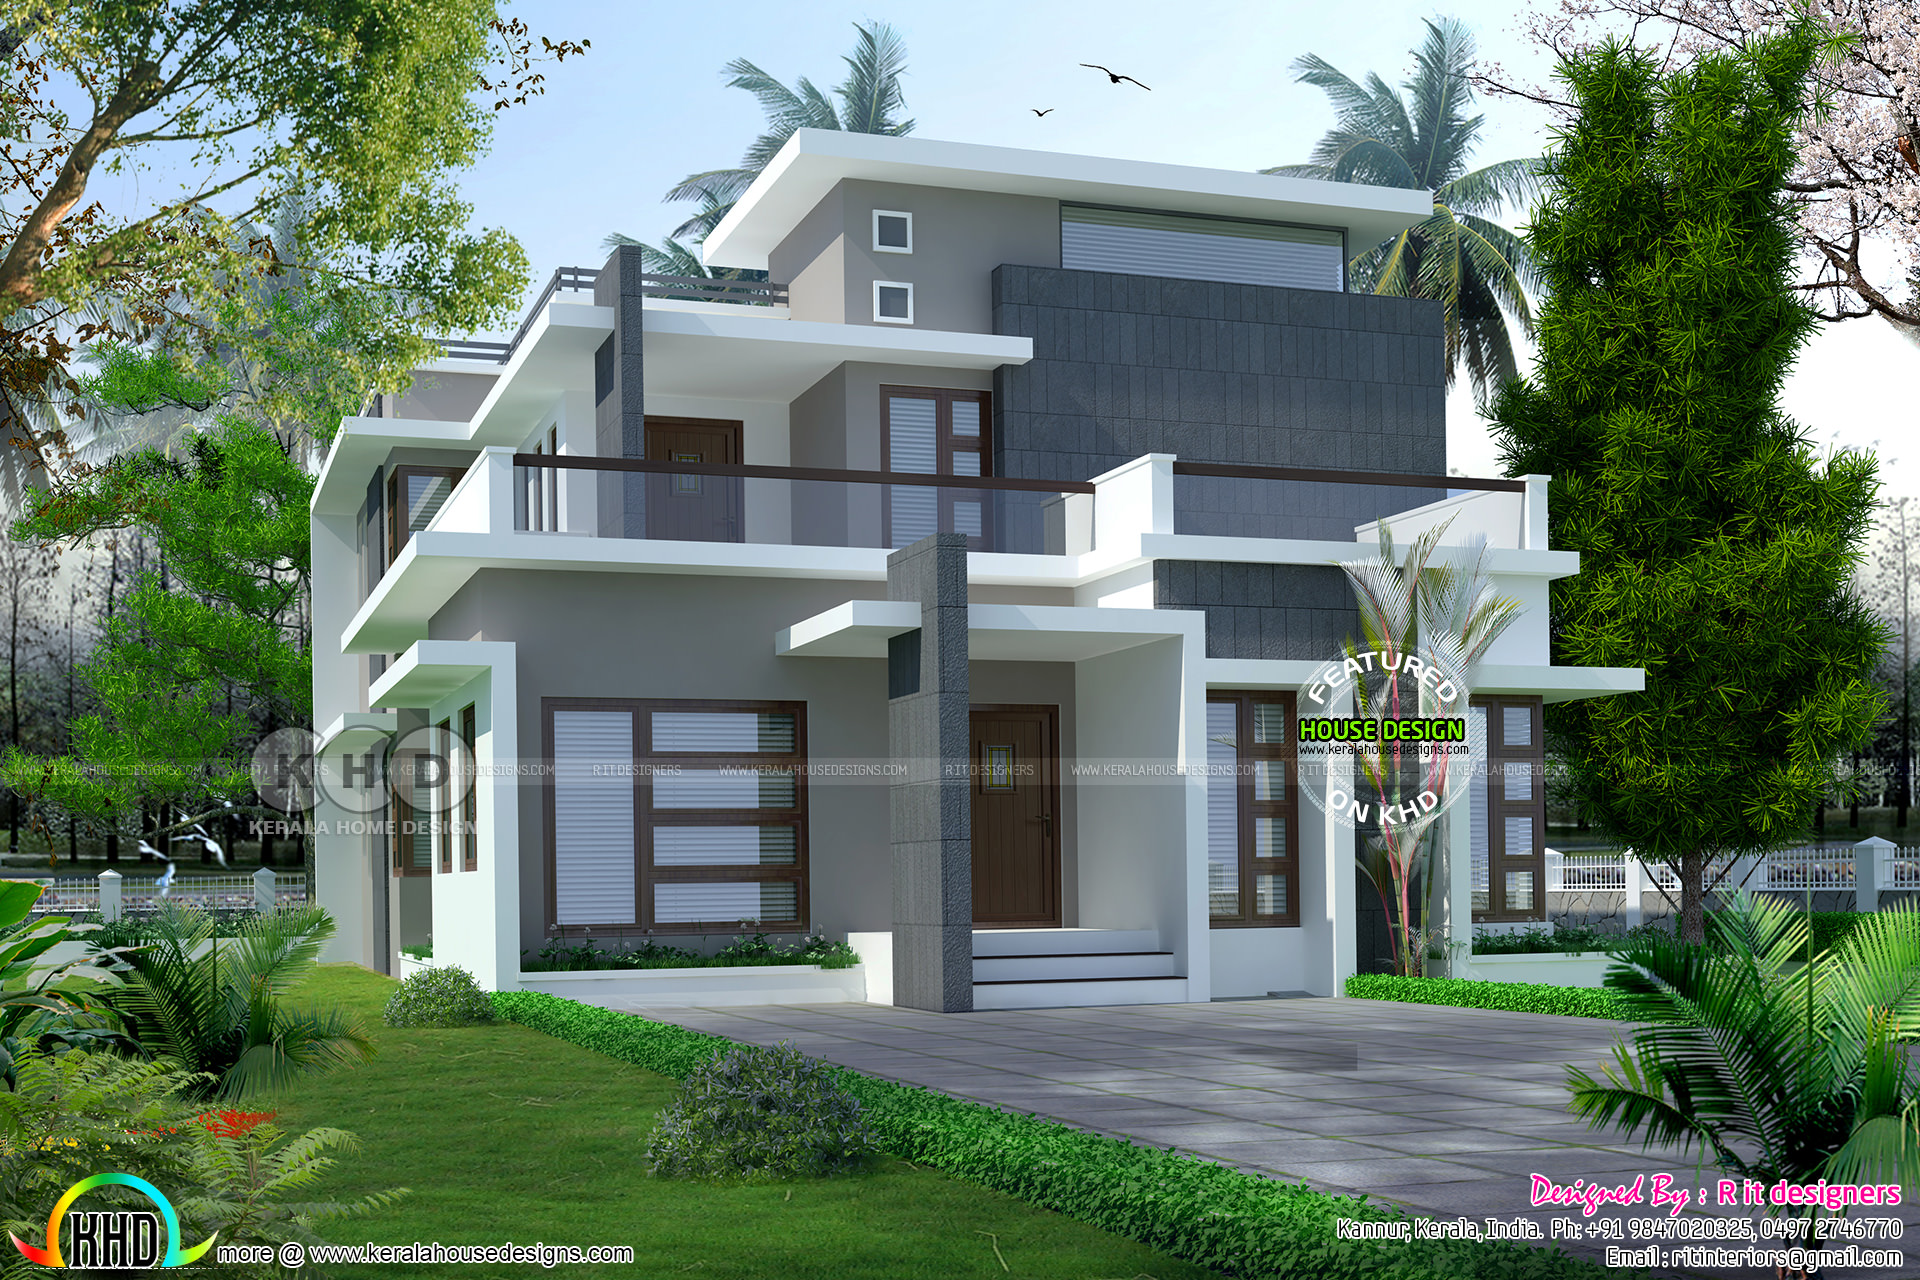 2238 sq-ft modern contemporary house in Kerala | Kerala home design